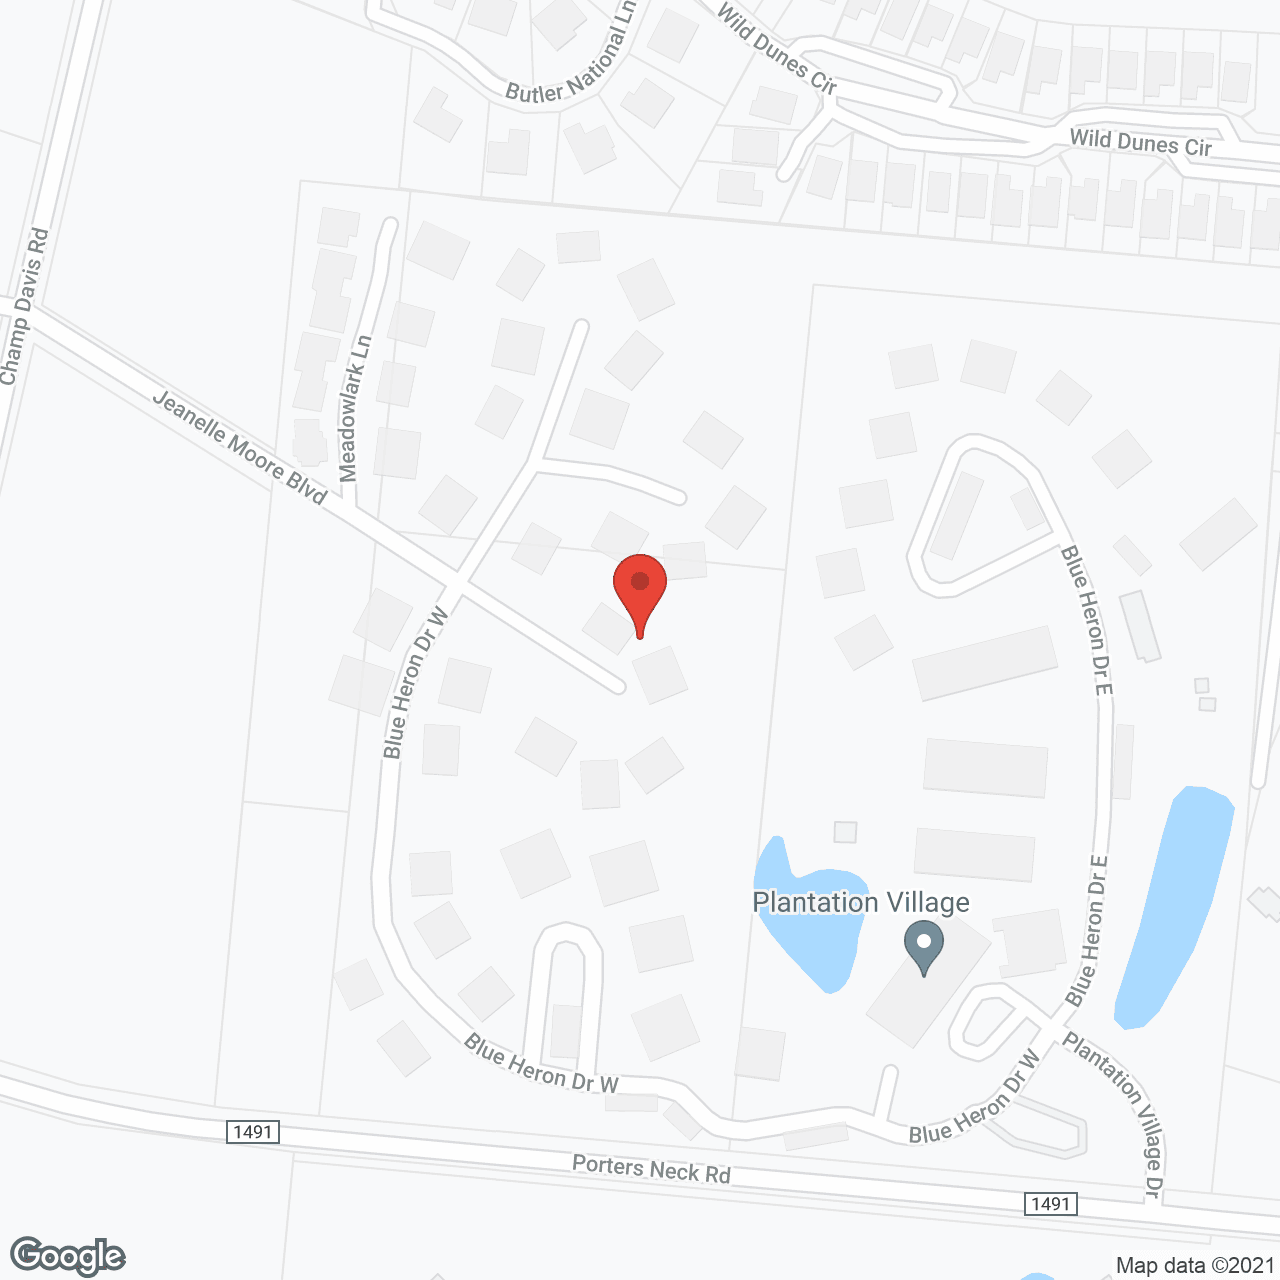 Porters Neck Village in google map